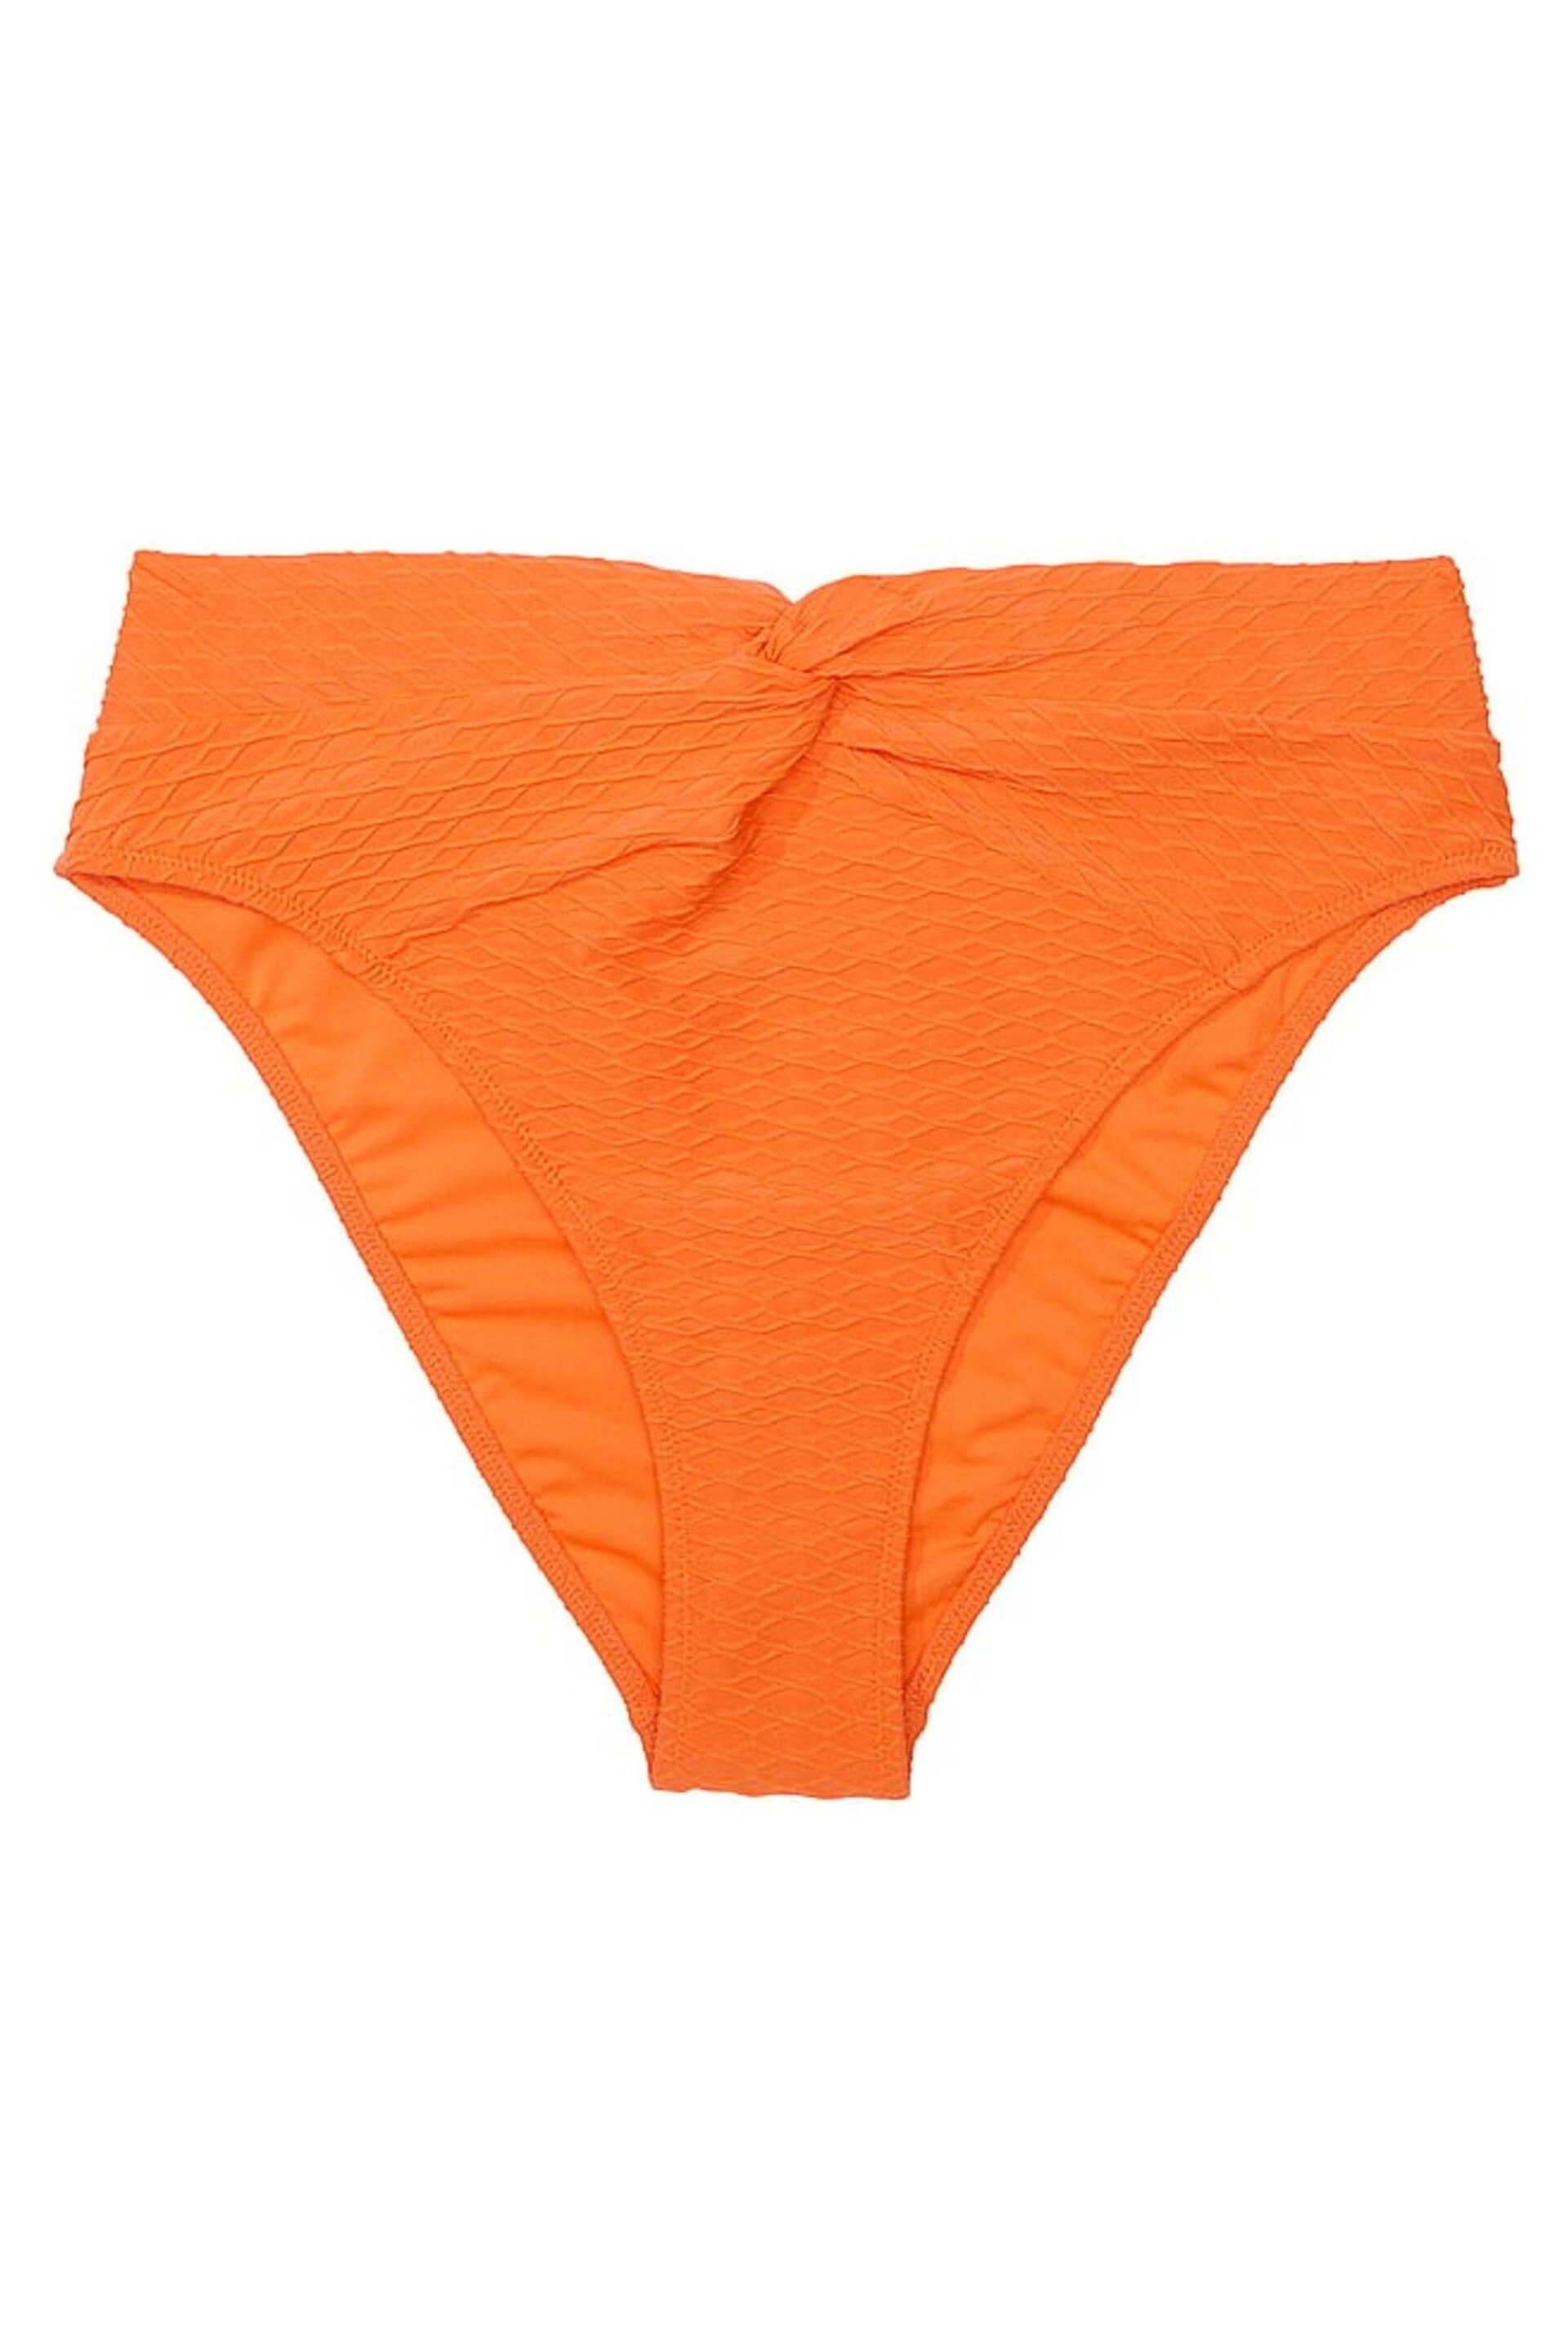 Victoria's Secret Sunset Orange Fishnet High Leg Swim Bikini Bottom - Image 3 of 3